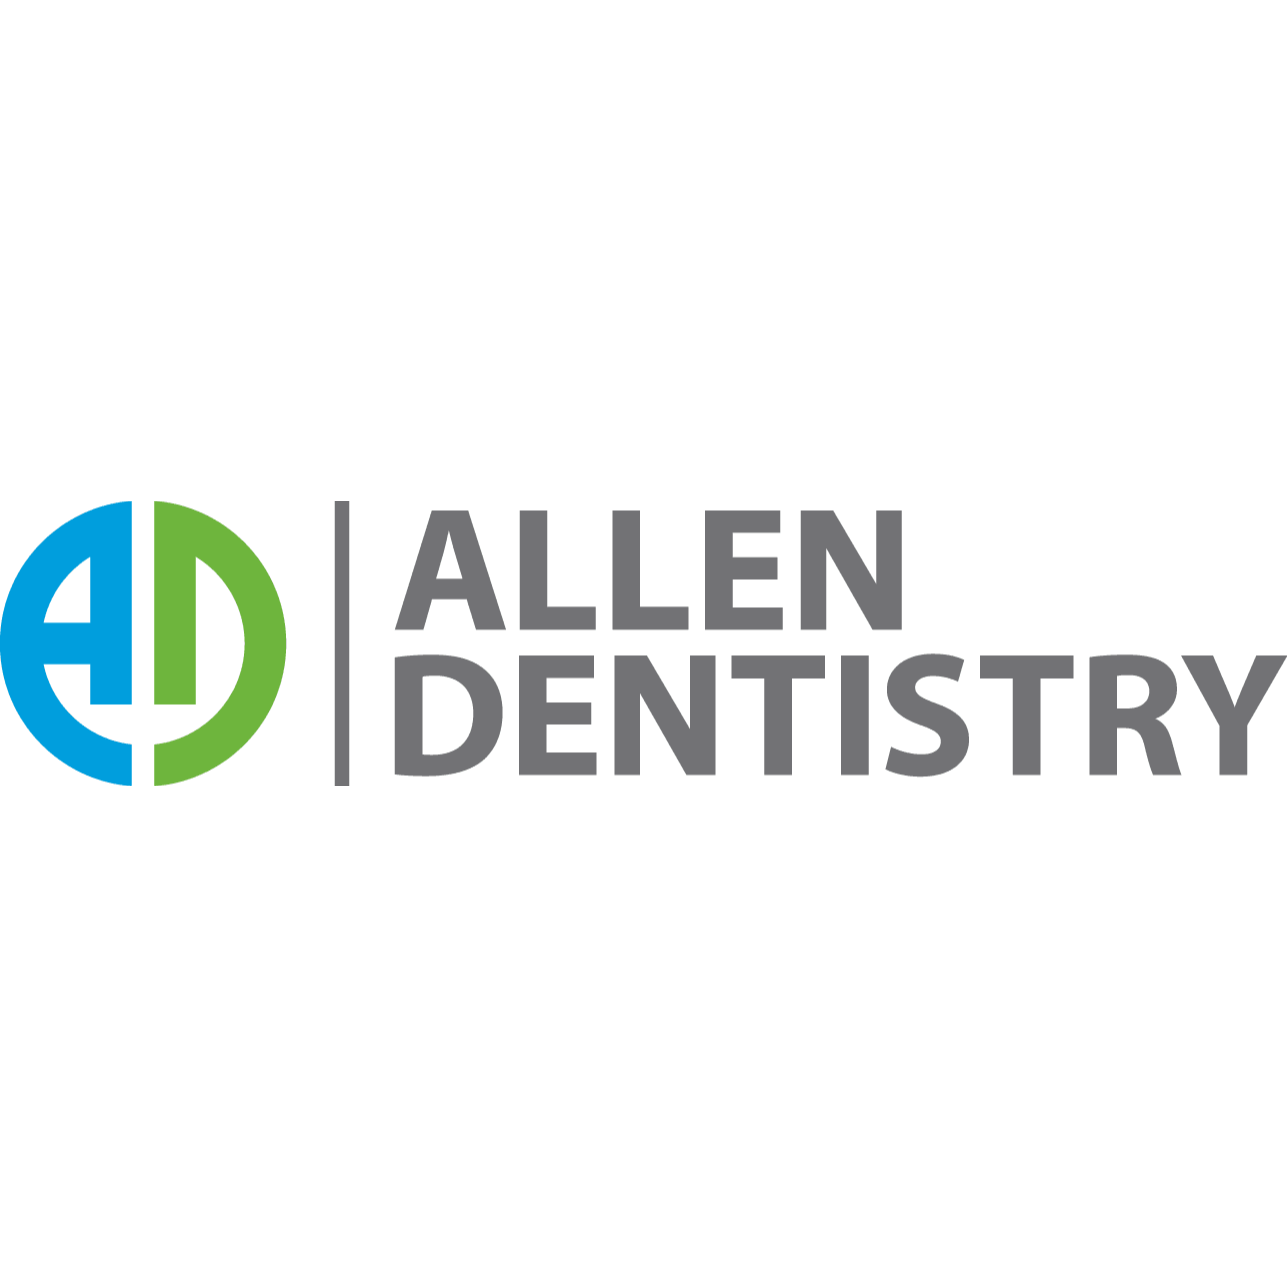 Allen Dentistry - Allen, TX 75013 - (972)359-9950 | ShowMeLocal.com